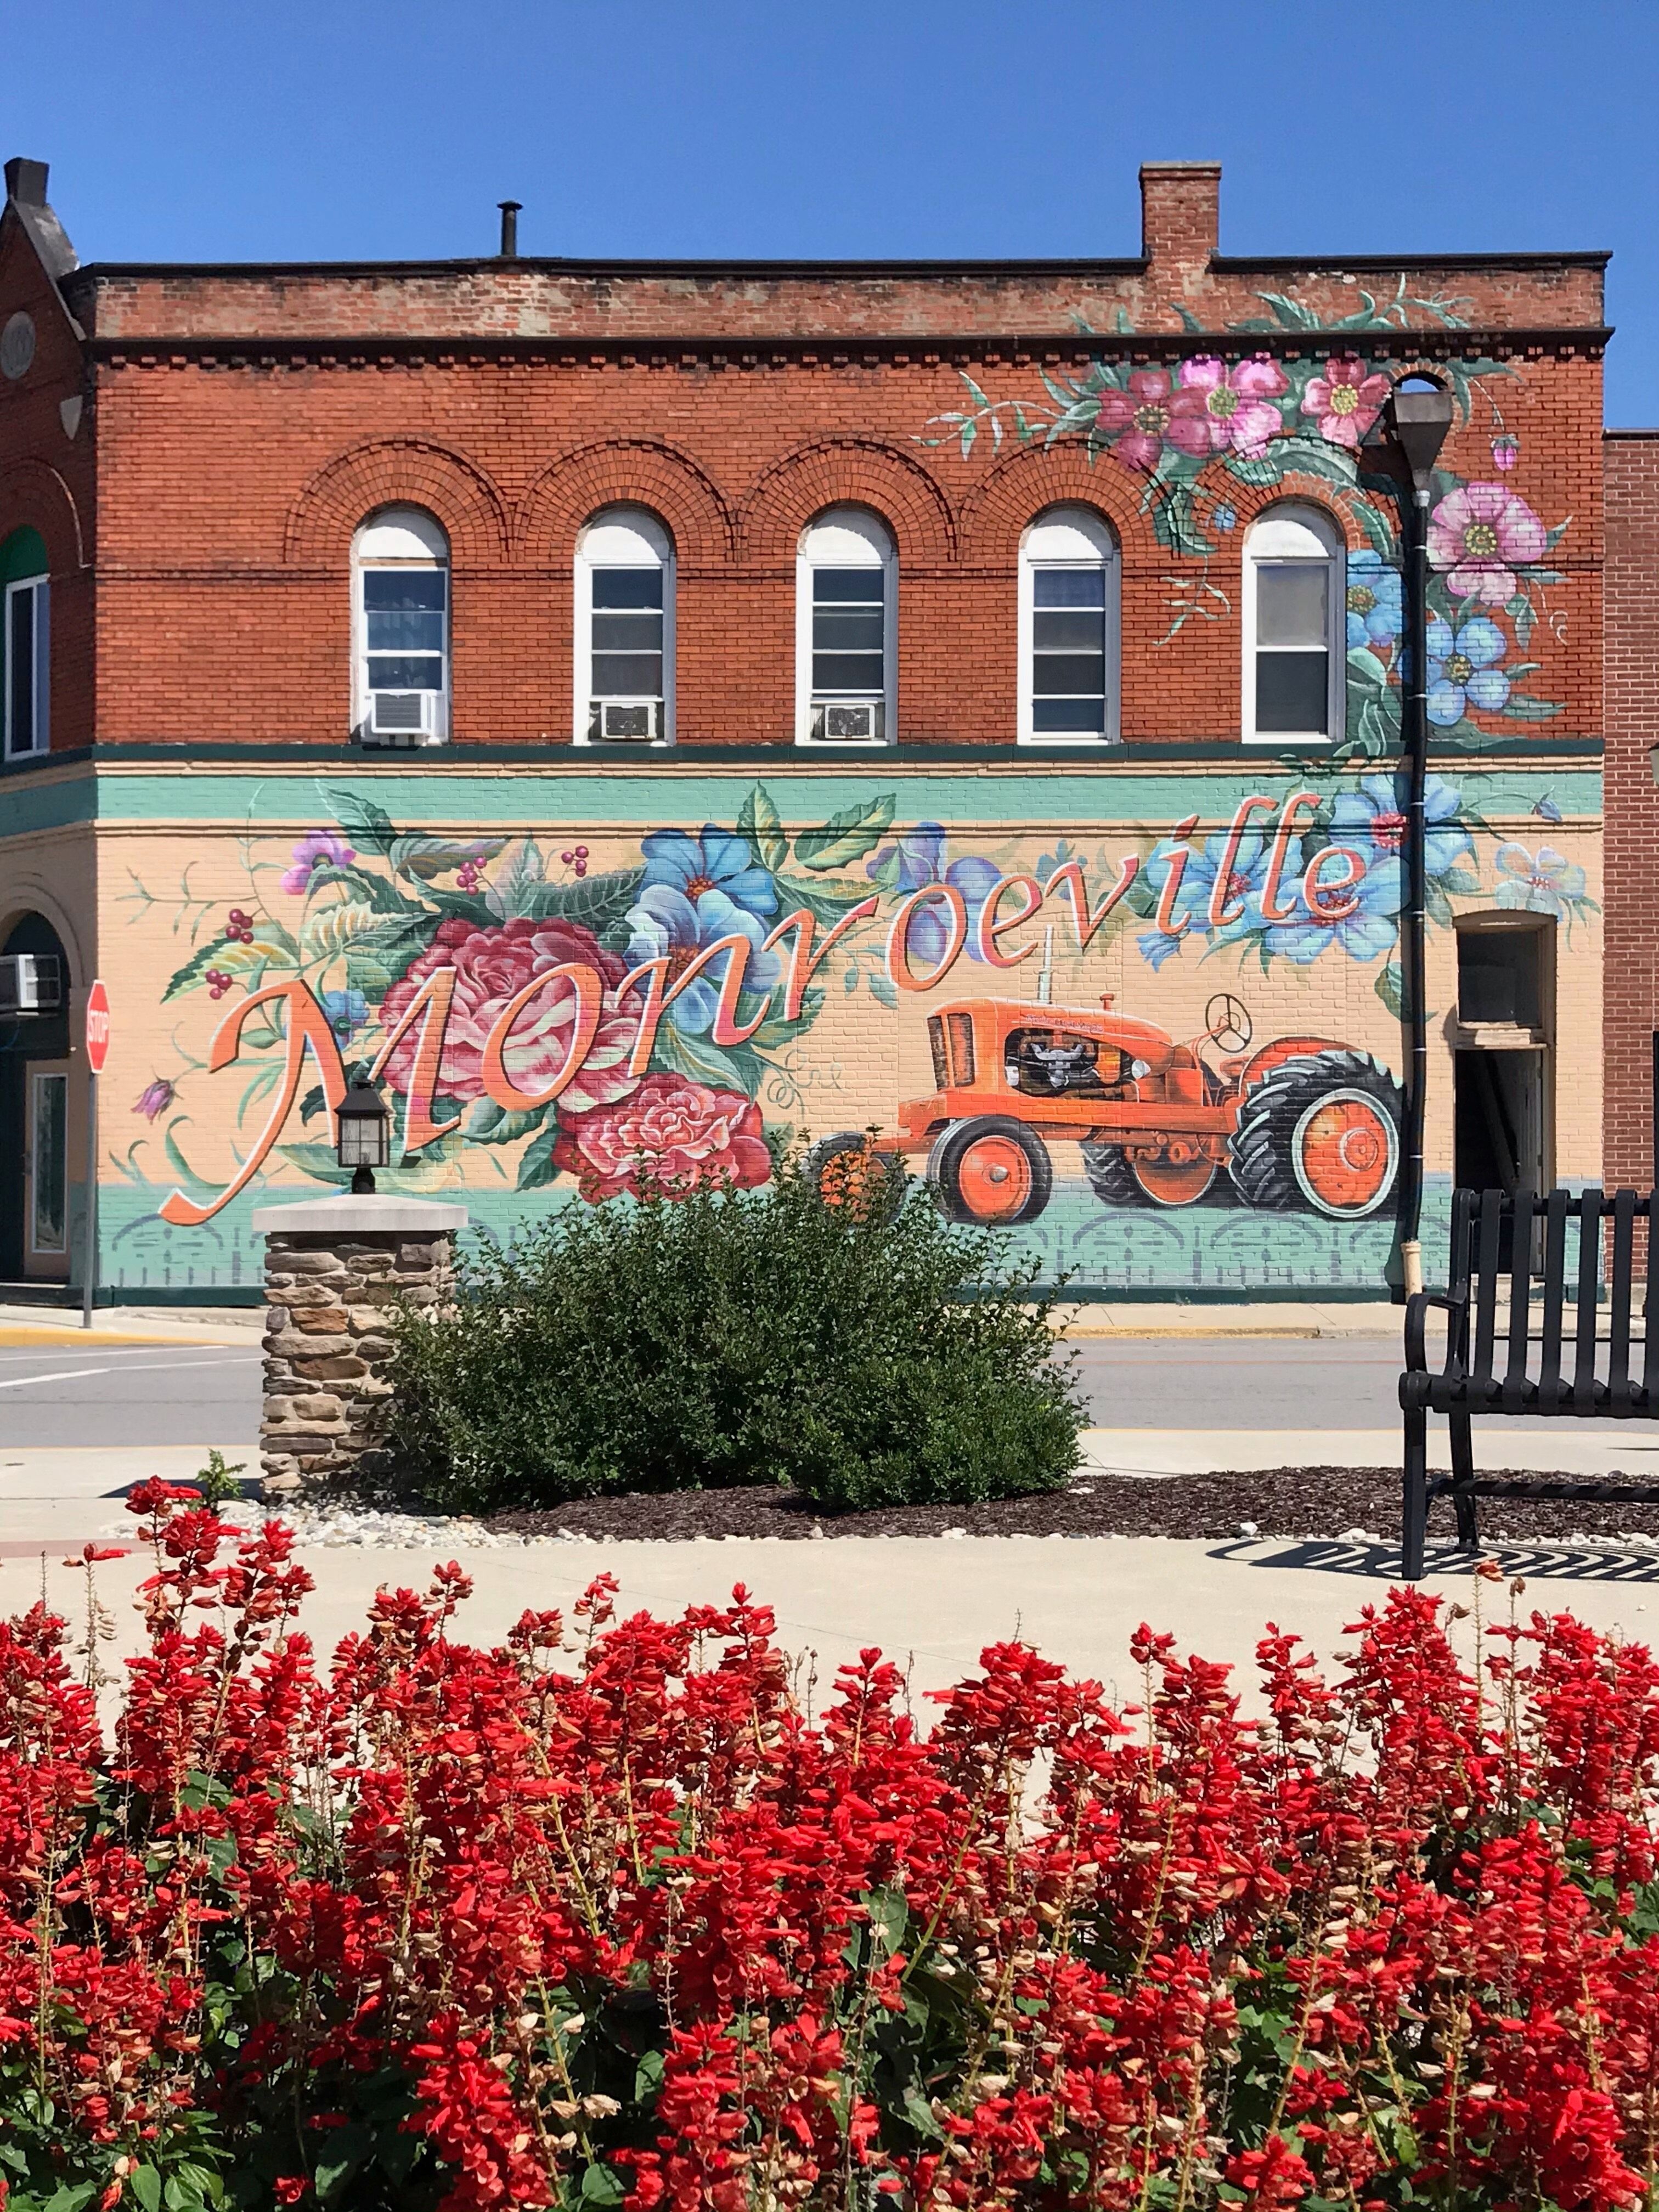 The NewAllen Alliance helped create five murals throughout Allen County’s rural communities as part of the East Allen Rural Revival Regional Development Plan.